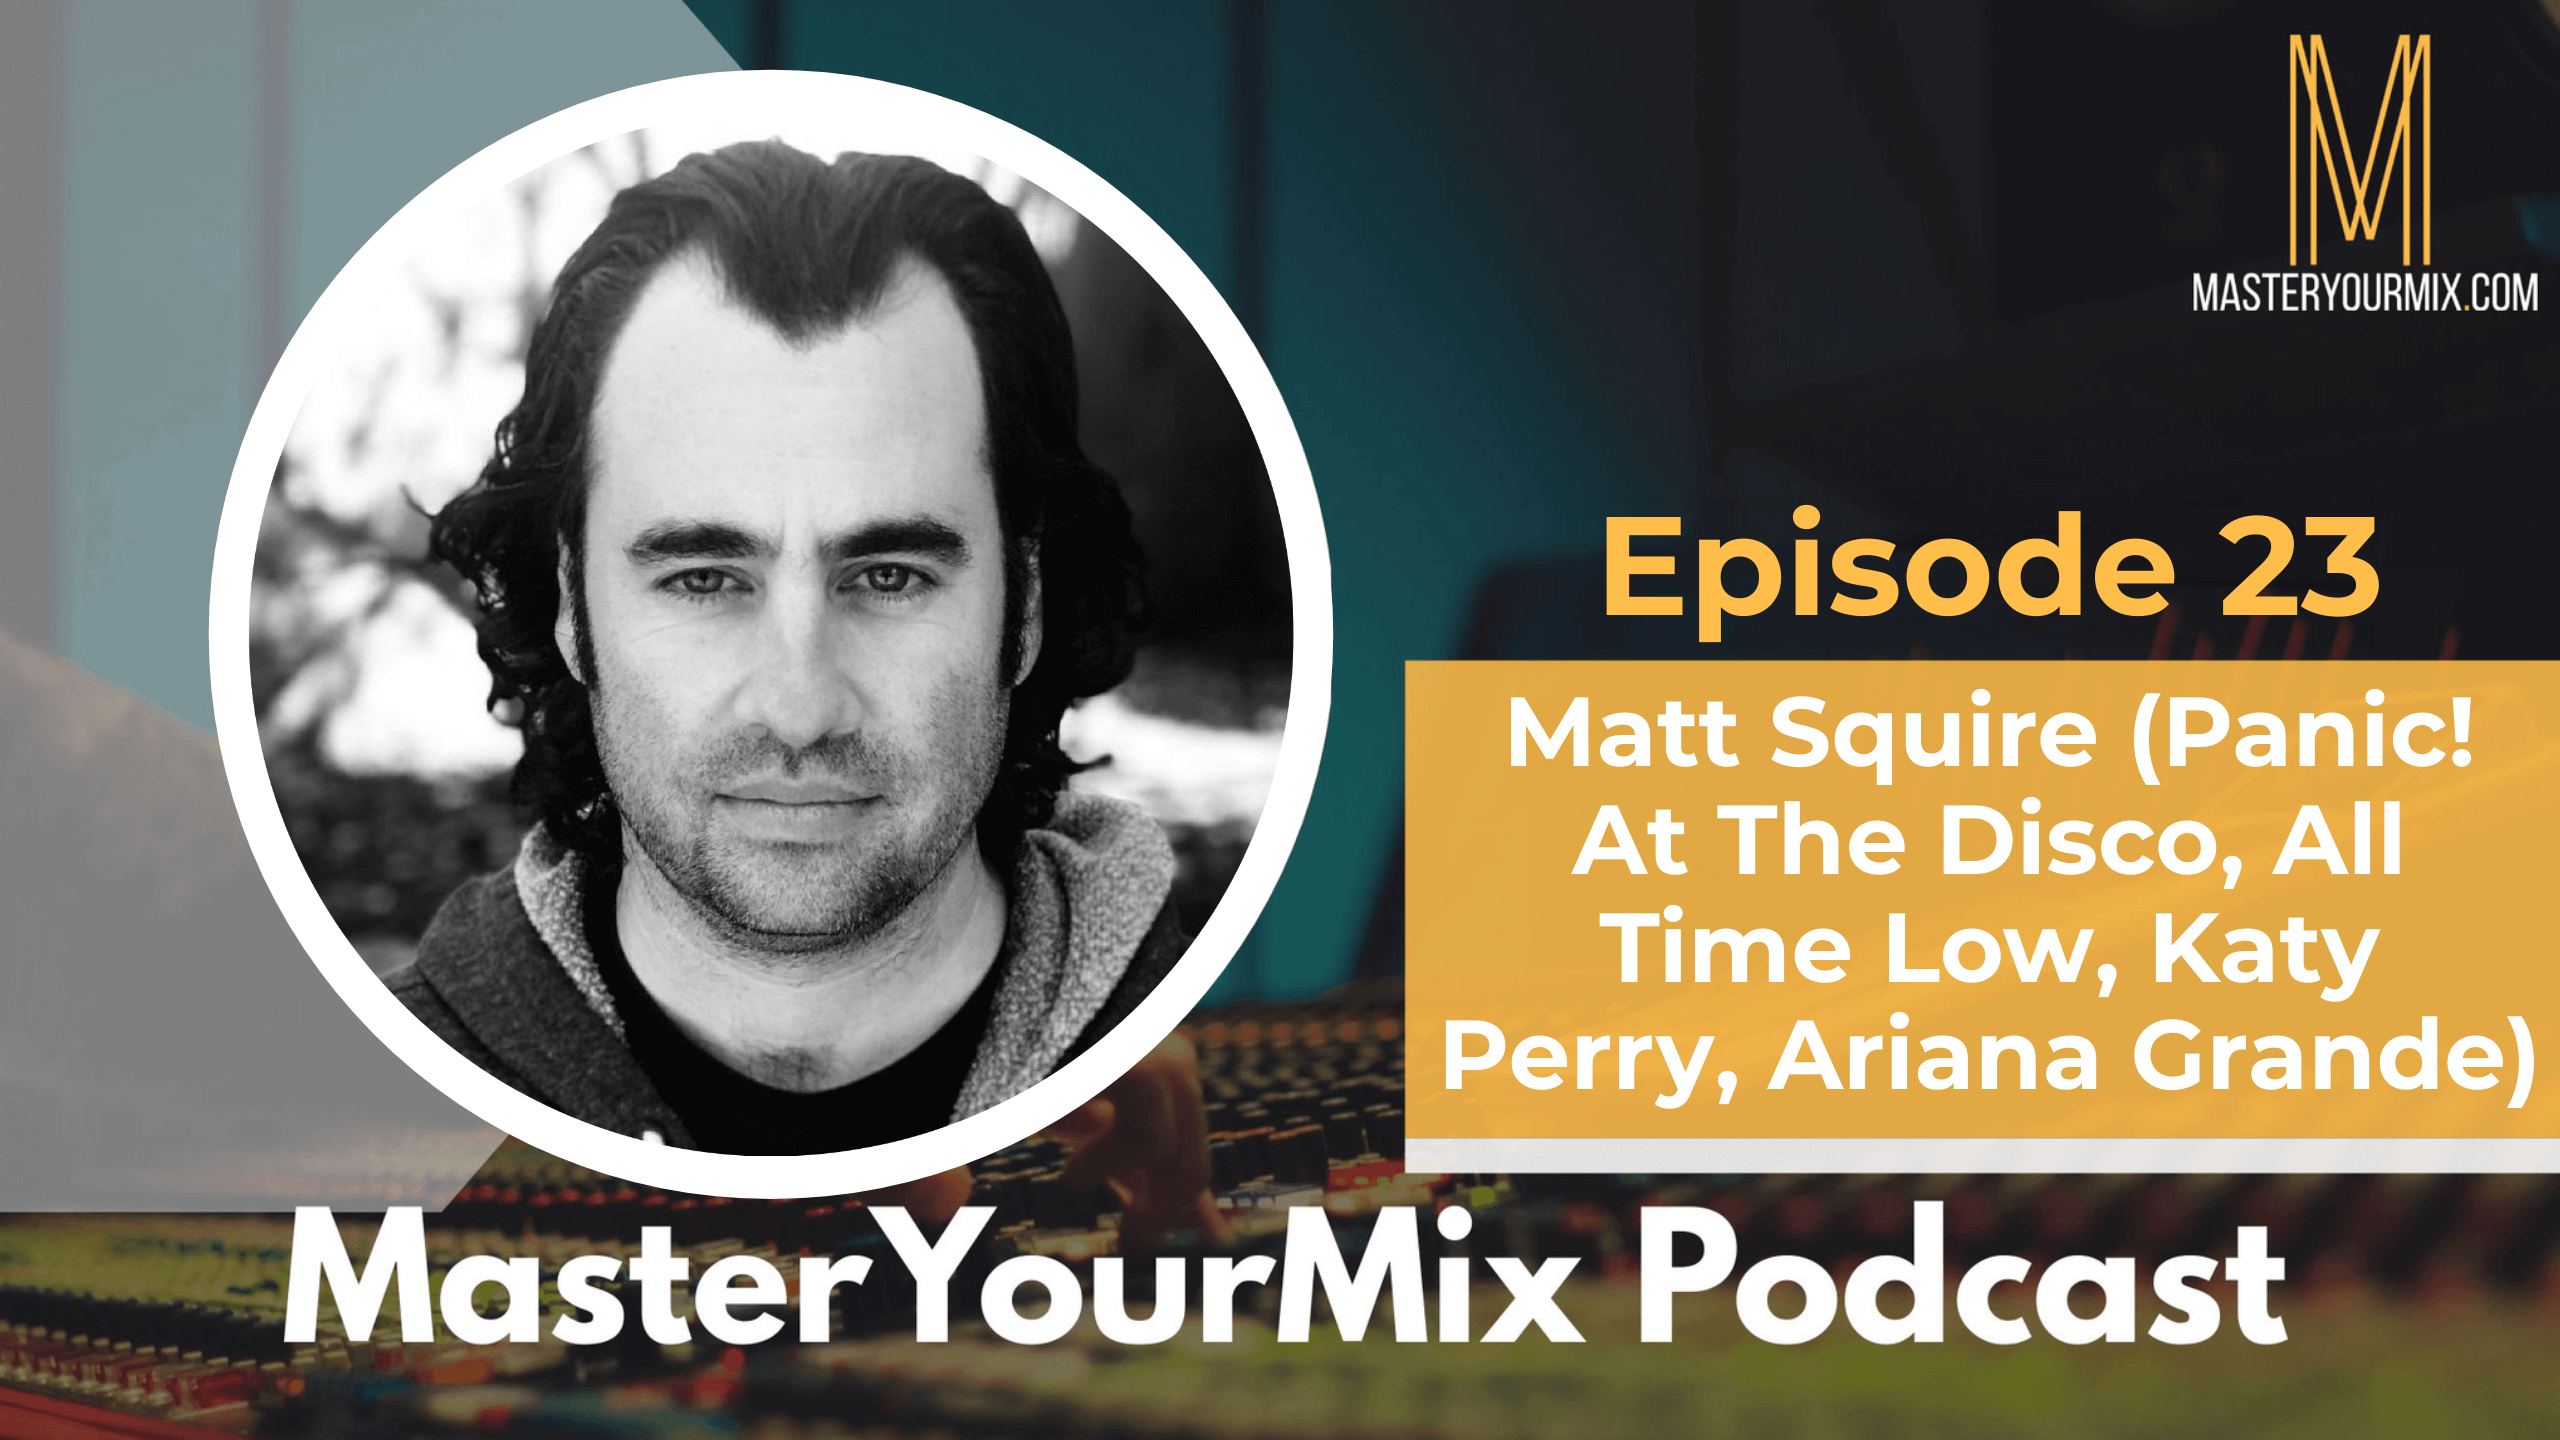 master your mix podcast, ep 23 matt squire